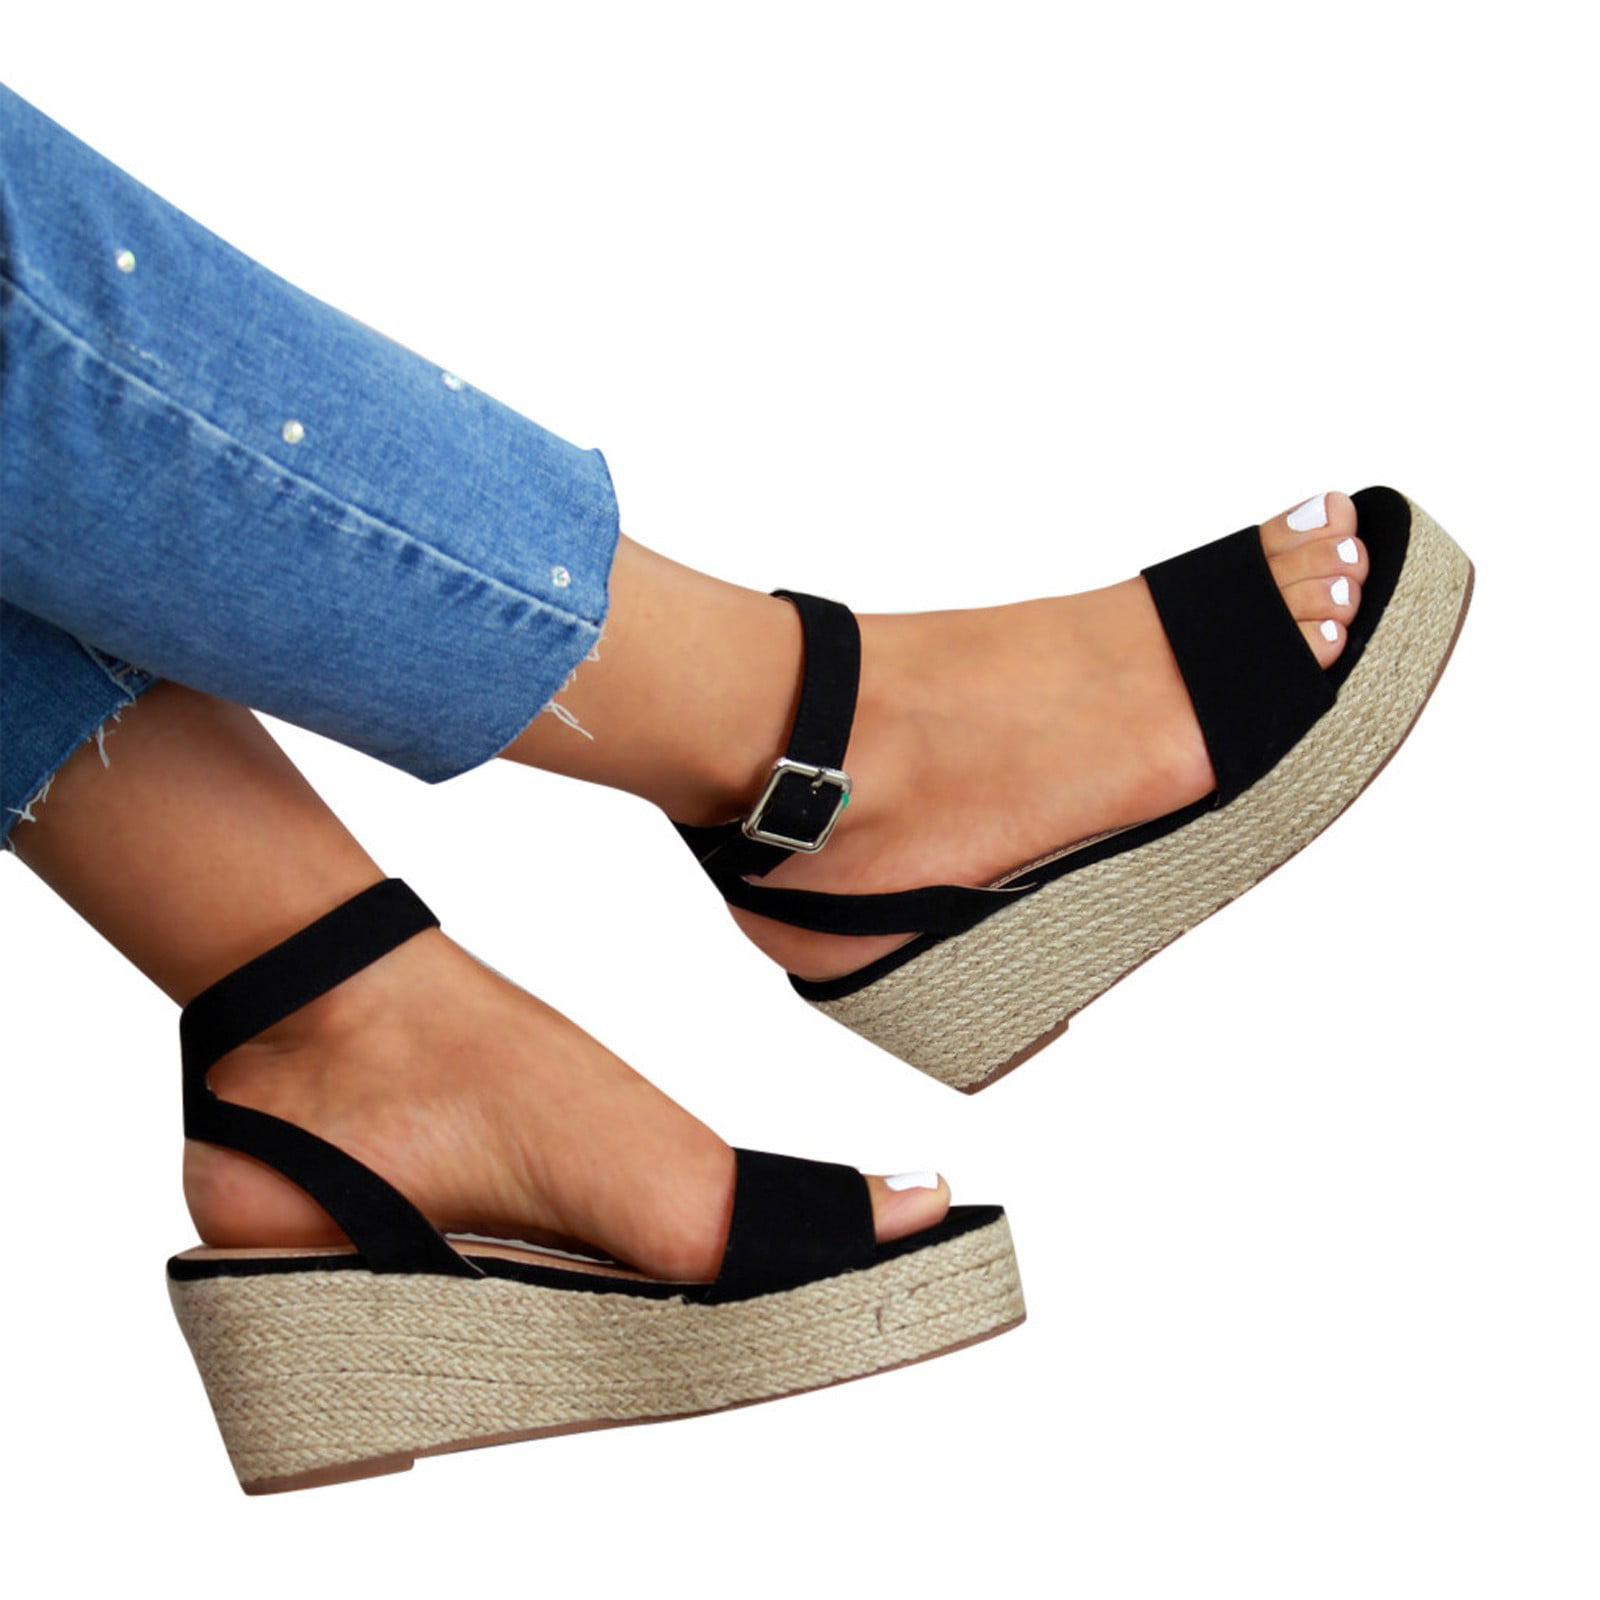 Women Wedges Sandals,Ladies Roman Sandals Fashion Solid Color Non-Slip Lightweight Peep Toe Buckle Strap Roman Shoes 